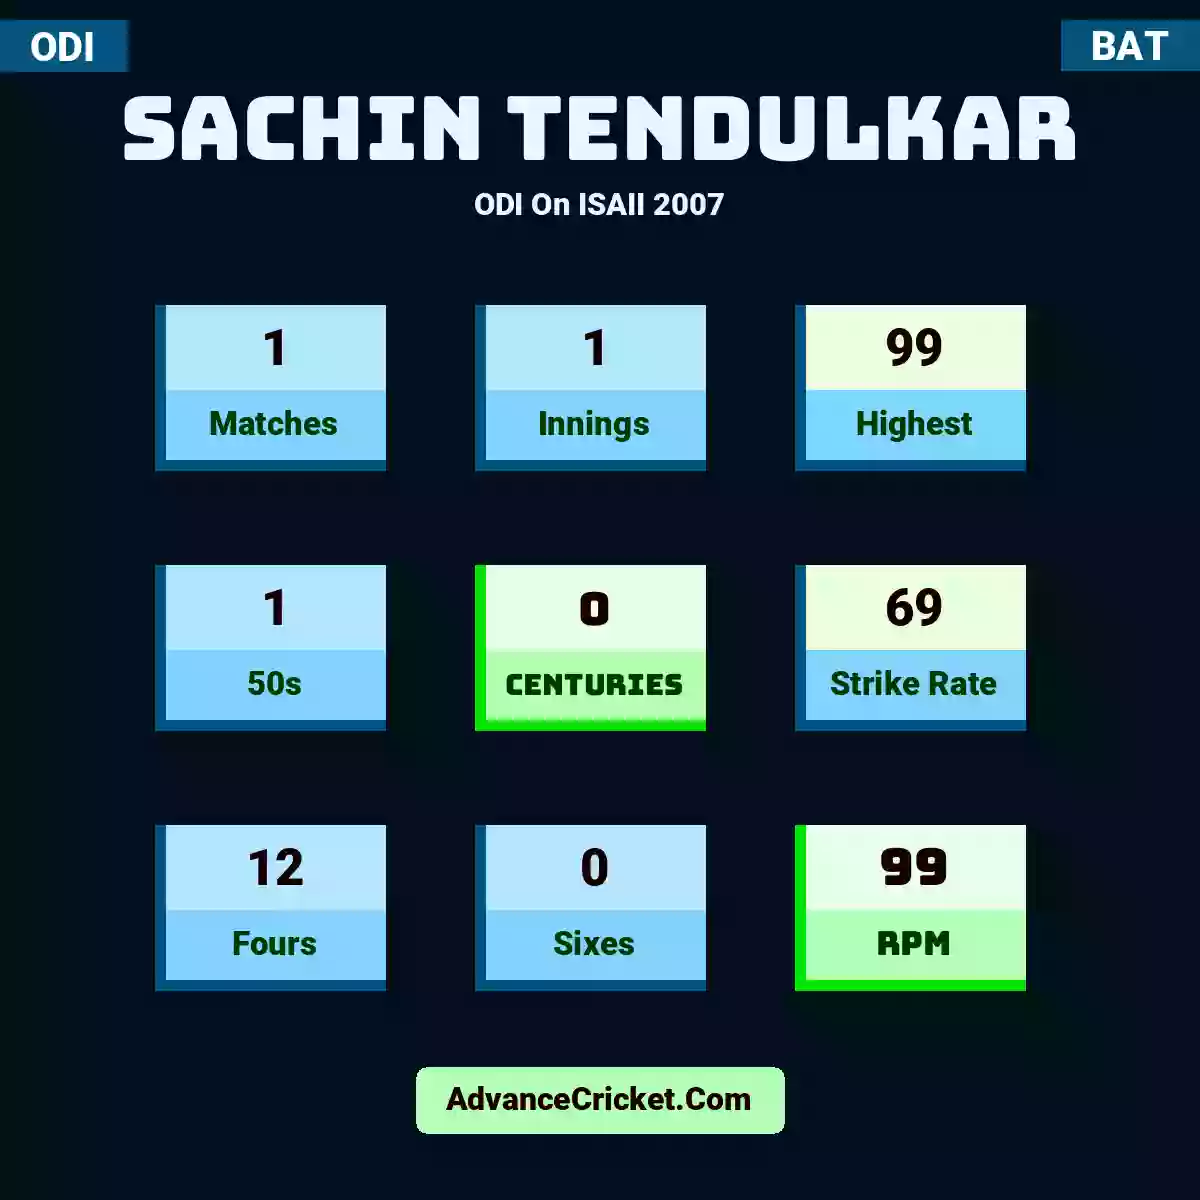 Sachin Tendulkar ODI  On ISAII 2007, Sachin Tendulkar played 1 matches, scored 99 runs as highest, 1 half-centuries, and 0 centuries, with a strike rate of 69. S.Tendulkar hit 12 fours and 0 sixes, with an RPM of 99.